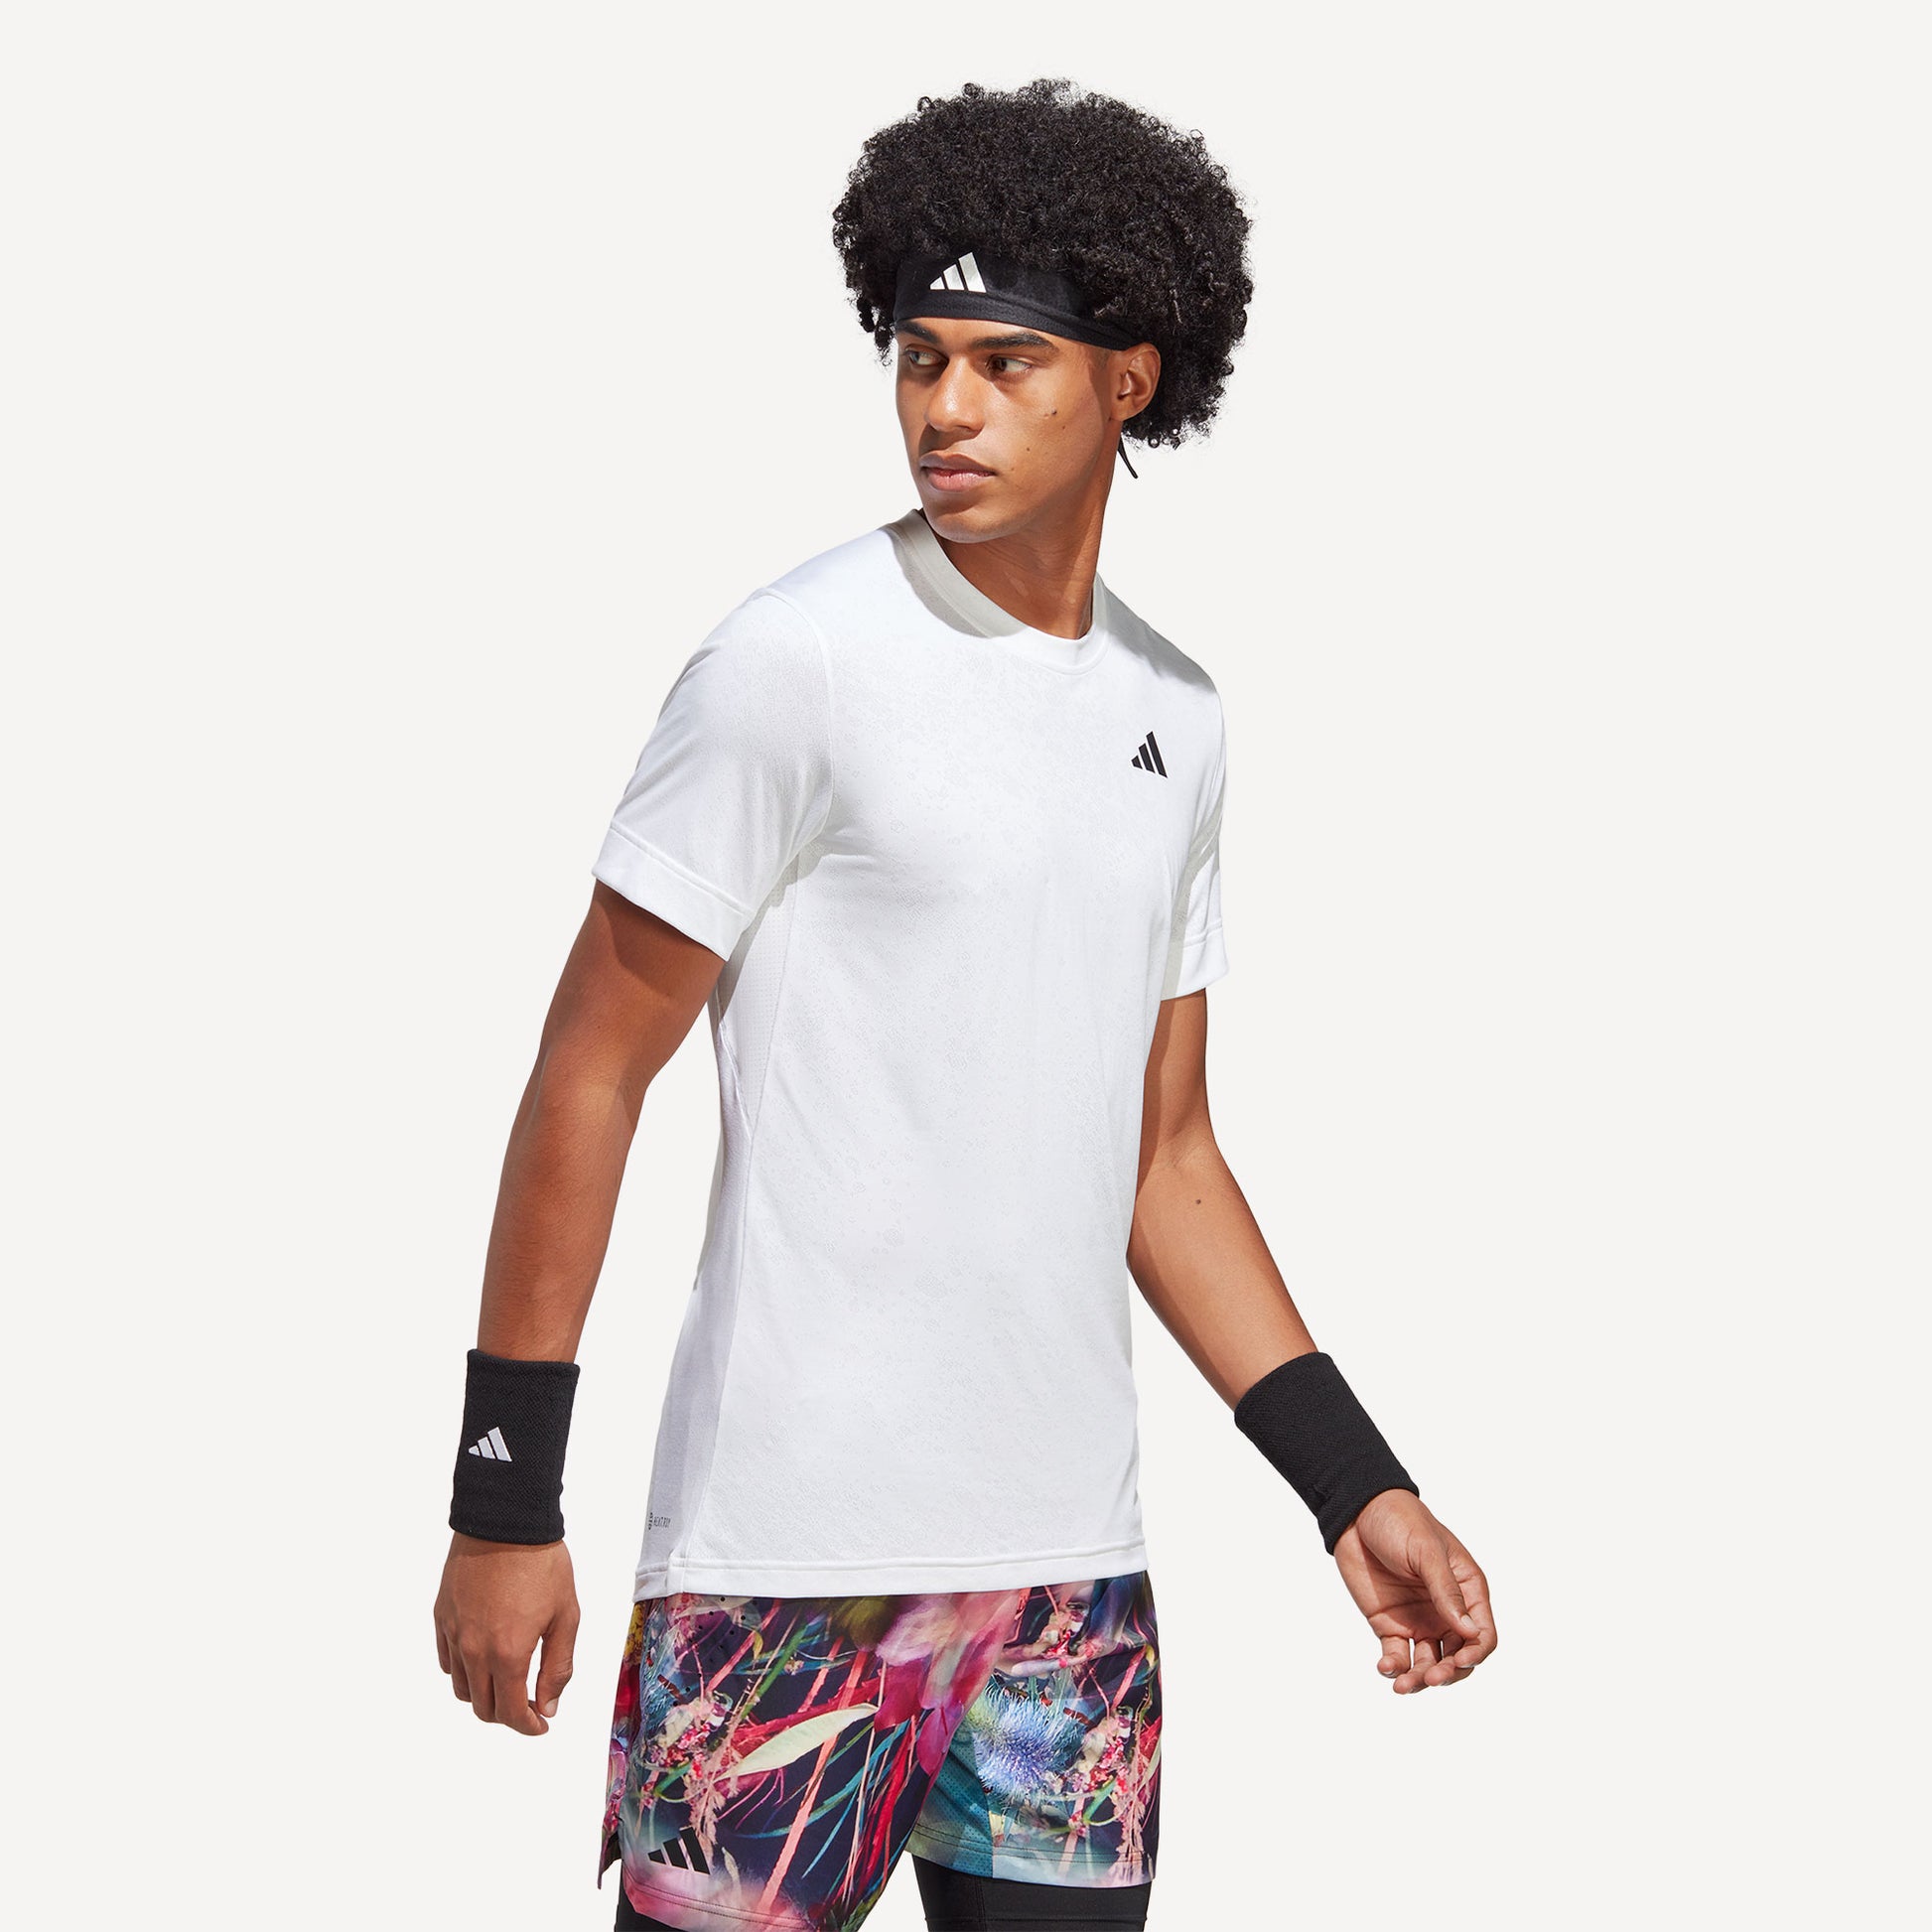 adidas FreeLift Men's Tennis Shirt White (4)